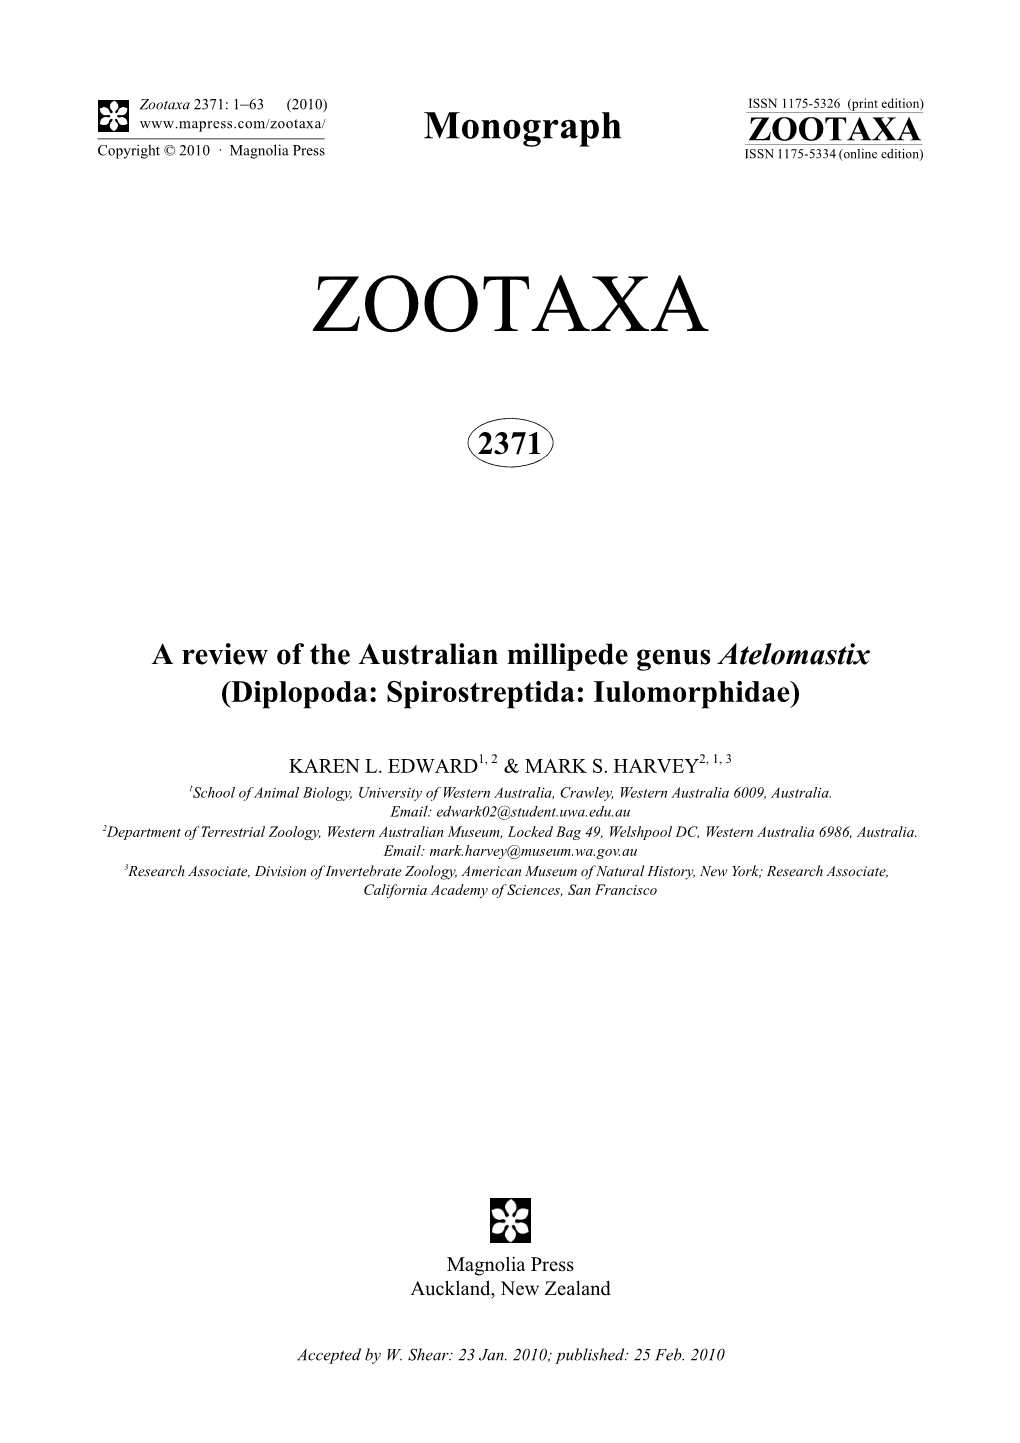 Zootaxa, a Review of the Australian Millipede Genus Atelomastix